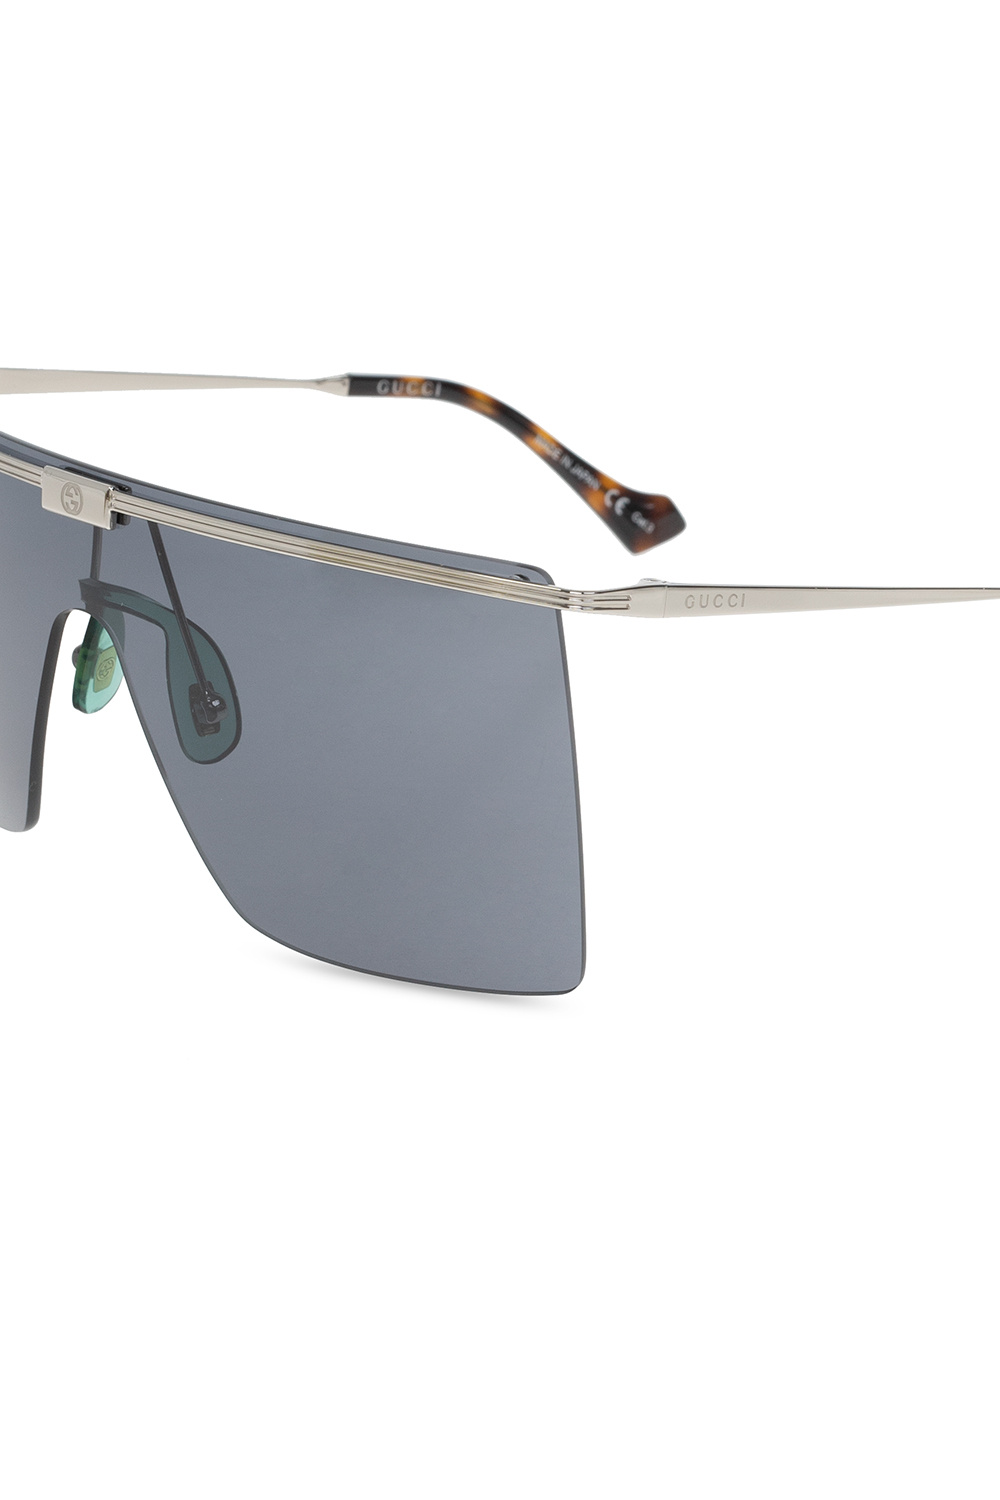 Gucci TOM FORD Eyewear tortoiseshell aviator frame sunglasses